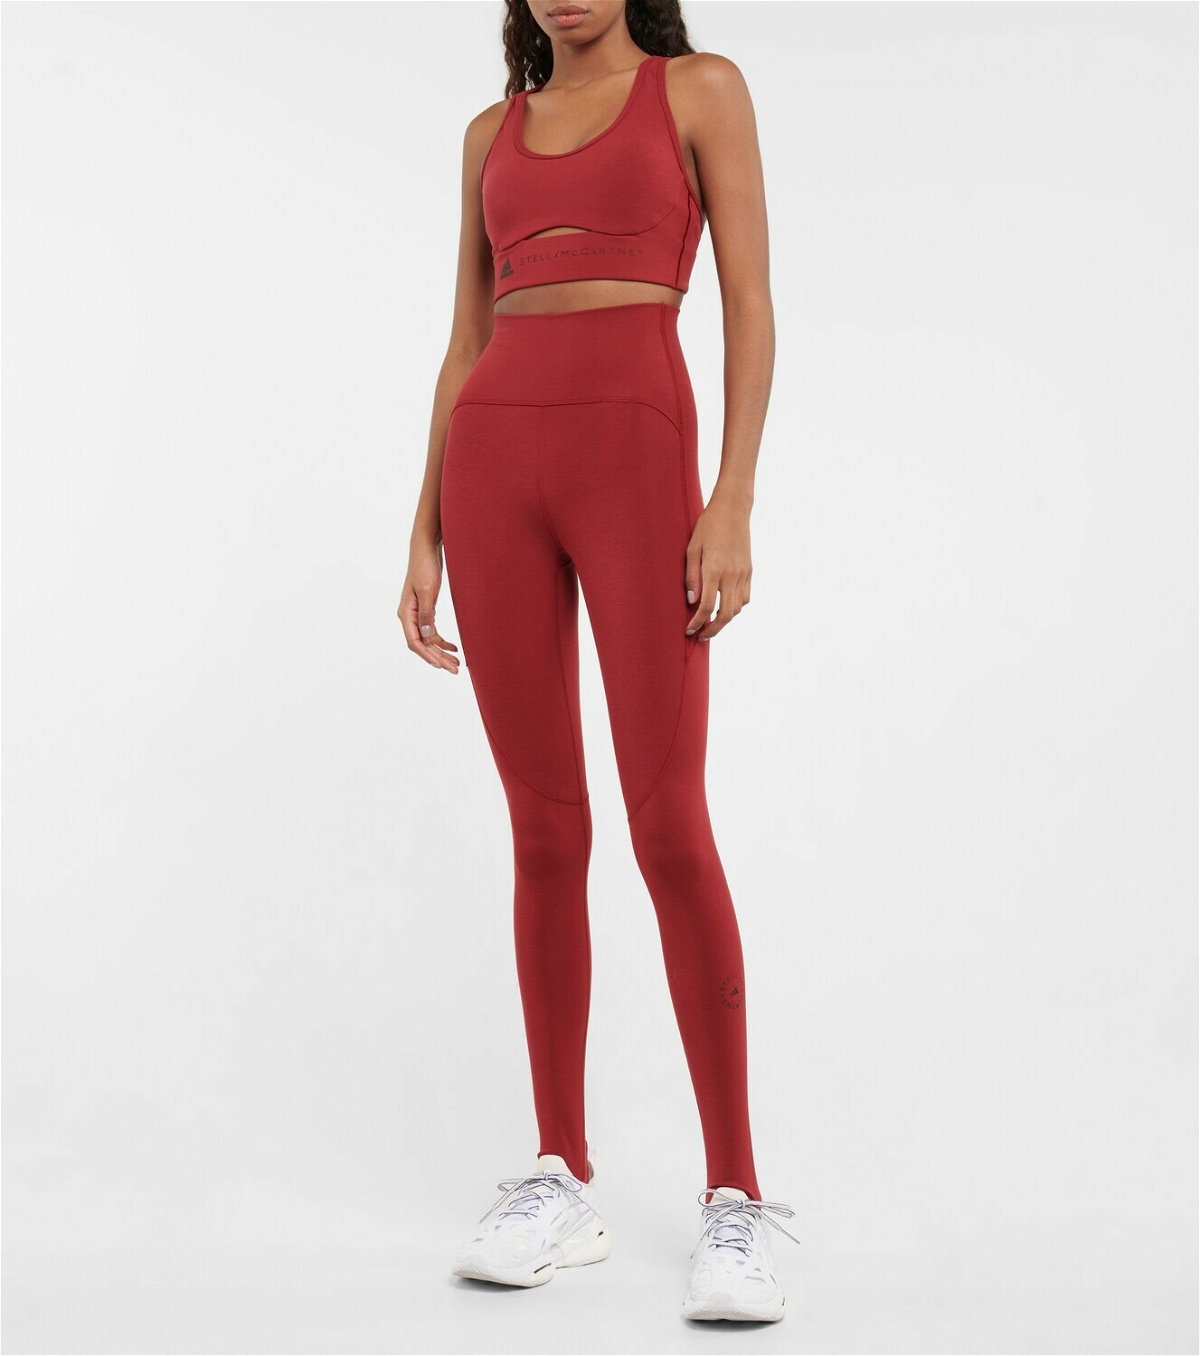 Adidas by Stella McCartney - TrueStrength high-rise leggings